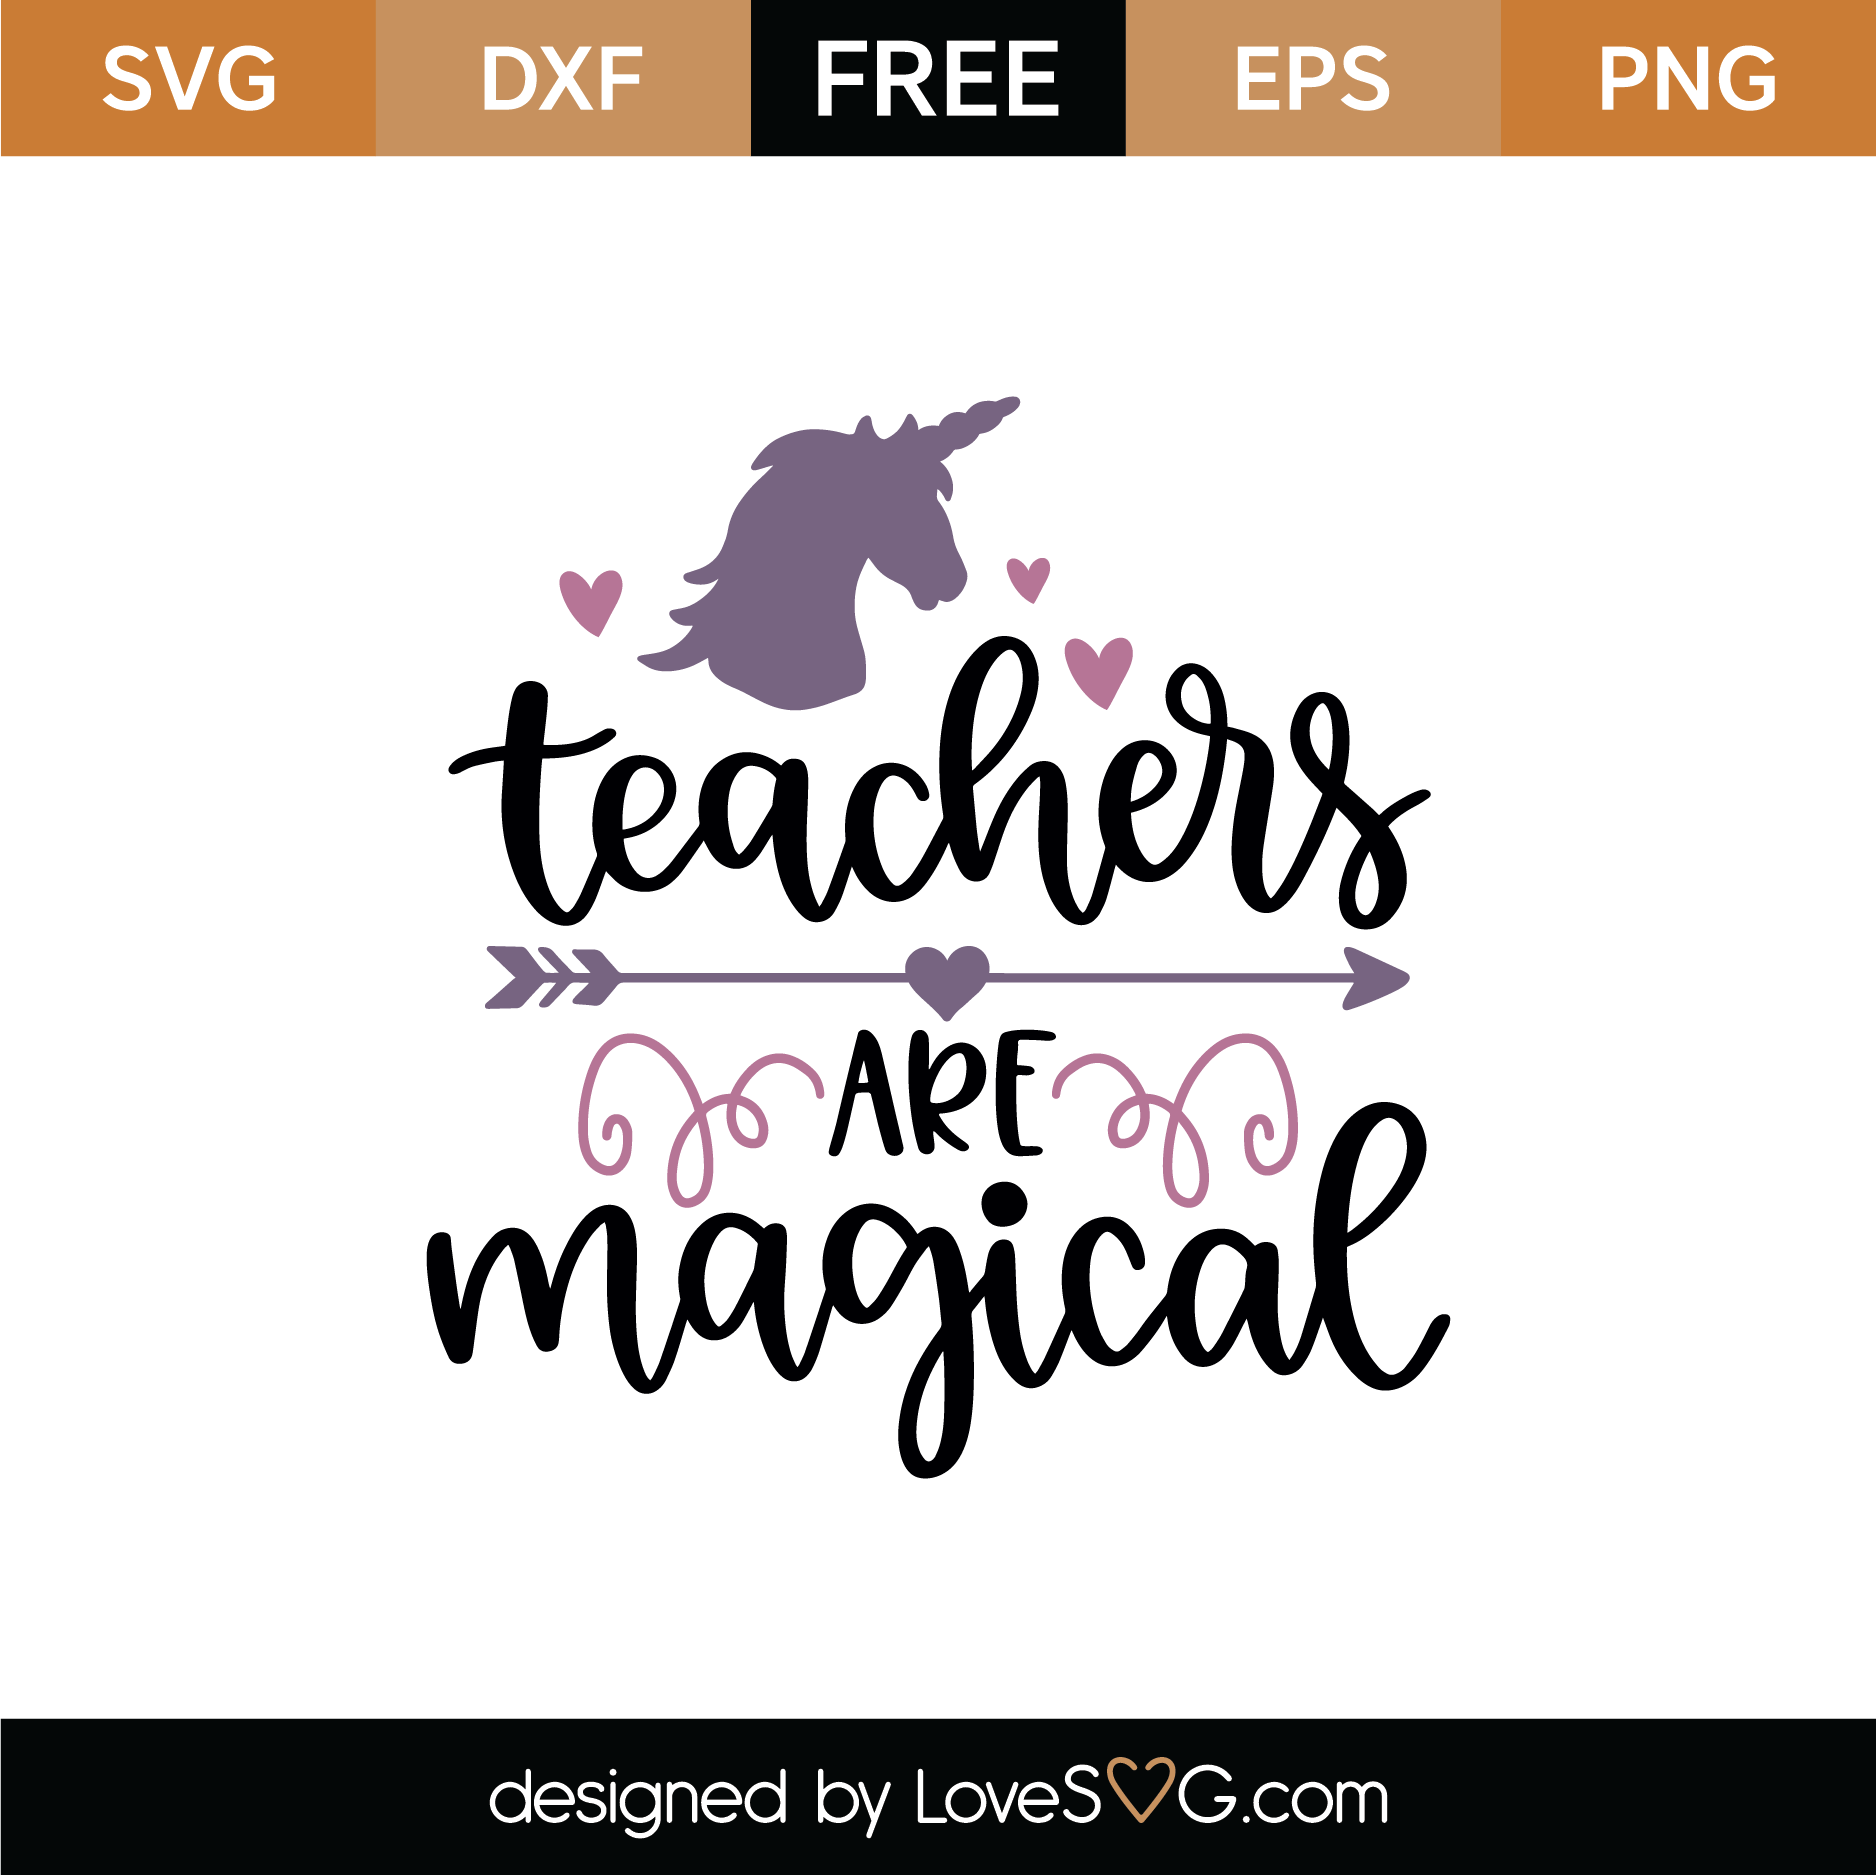 Download Free Teachers Are Magical SVG Cut File | Lovesvg.com